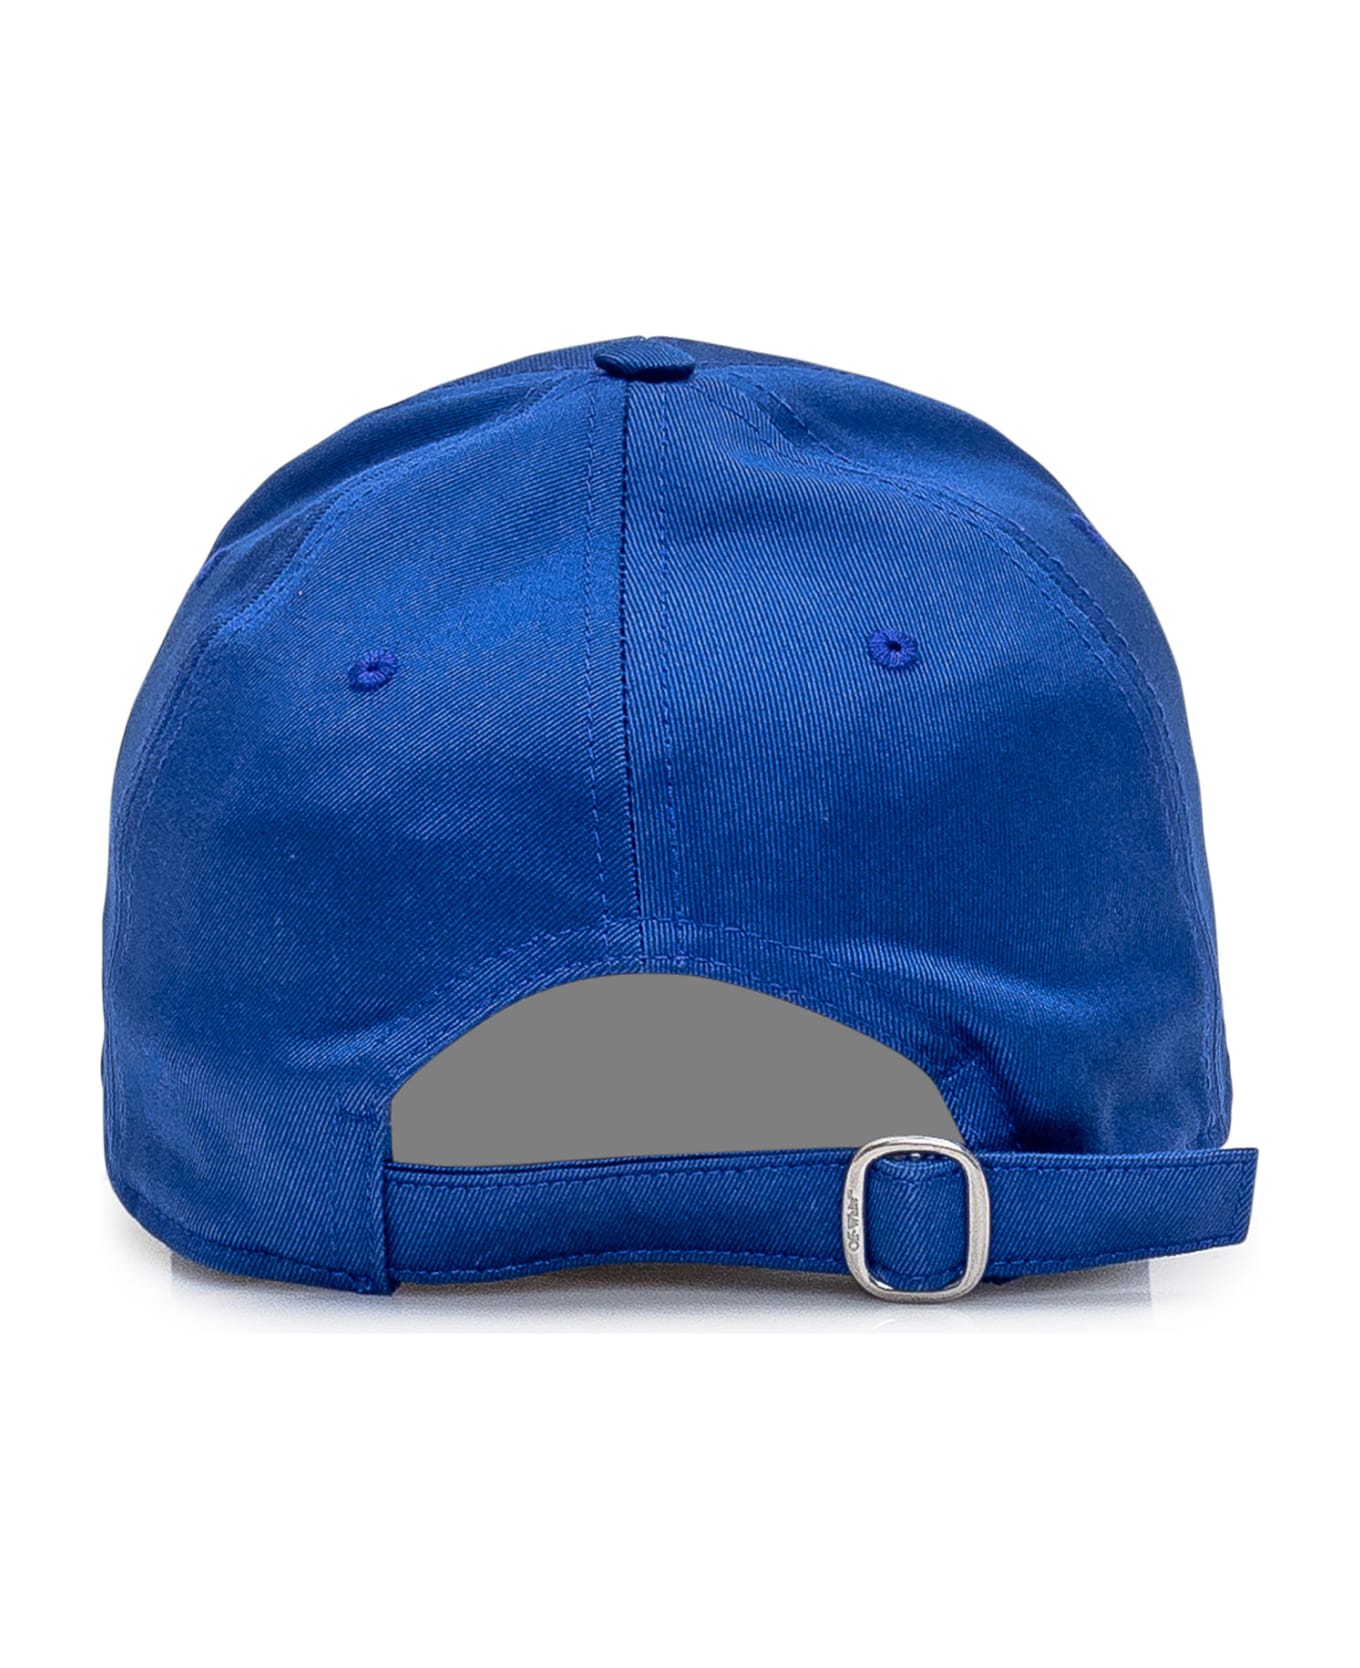 Off-White Baseball Cap - NAUTICAL BLUE